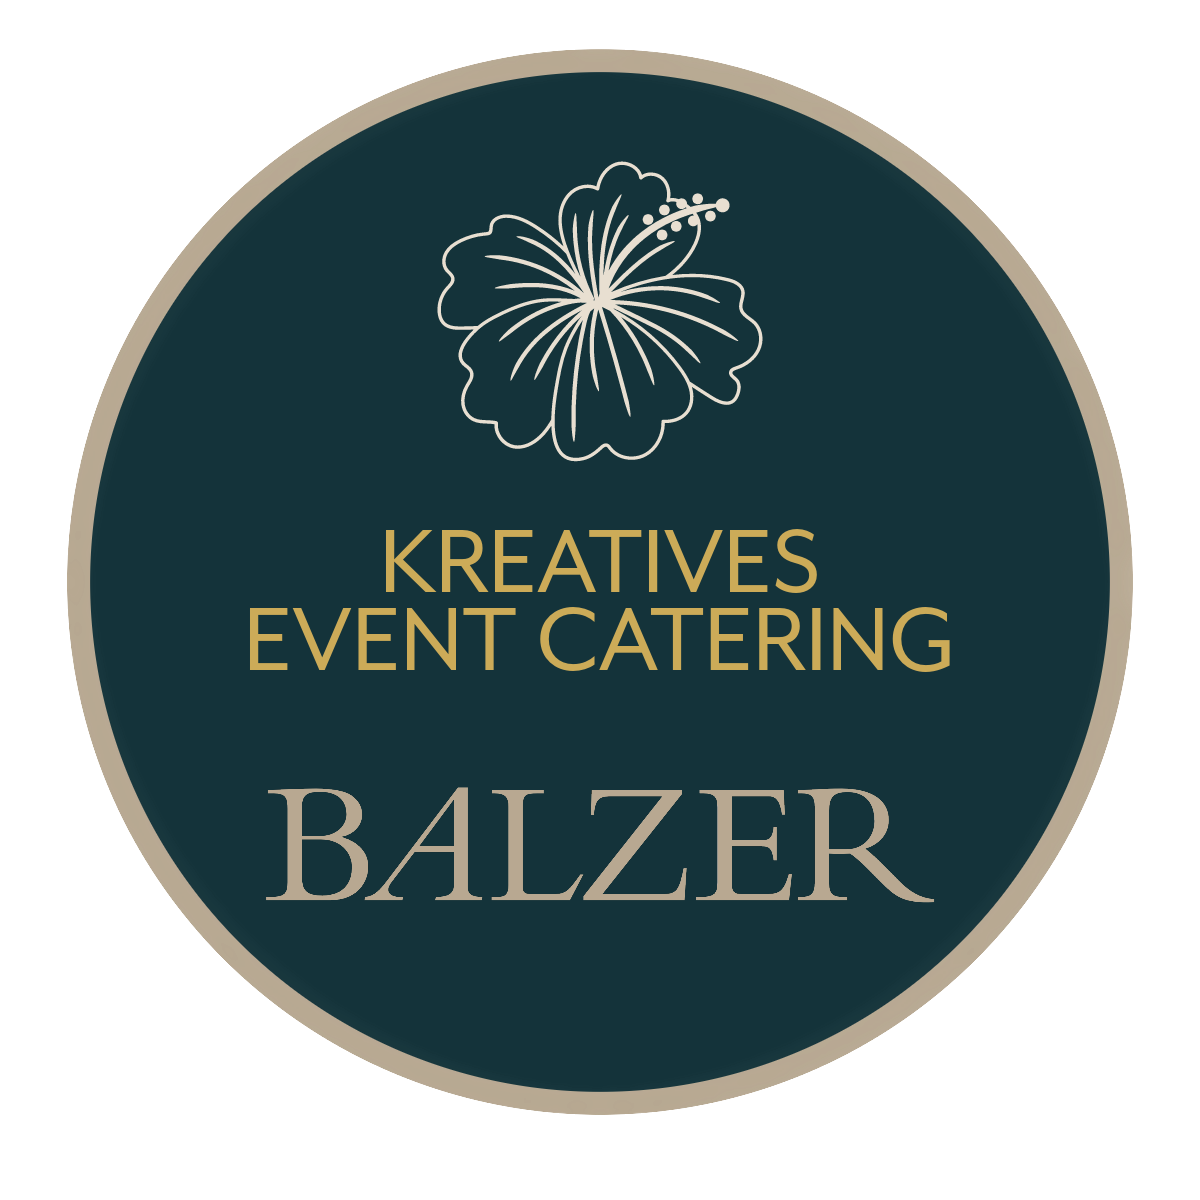 BALZER-Signet-Kreatives-Event-Catering